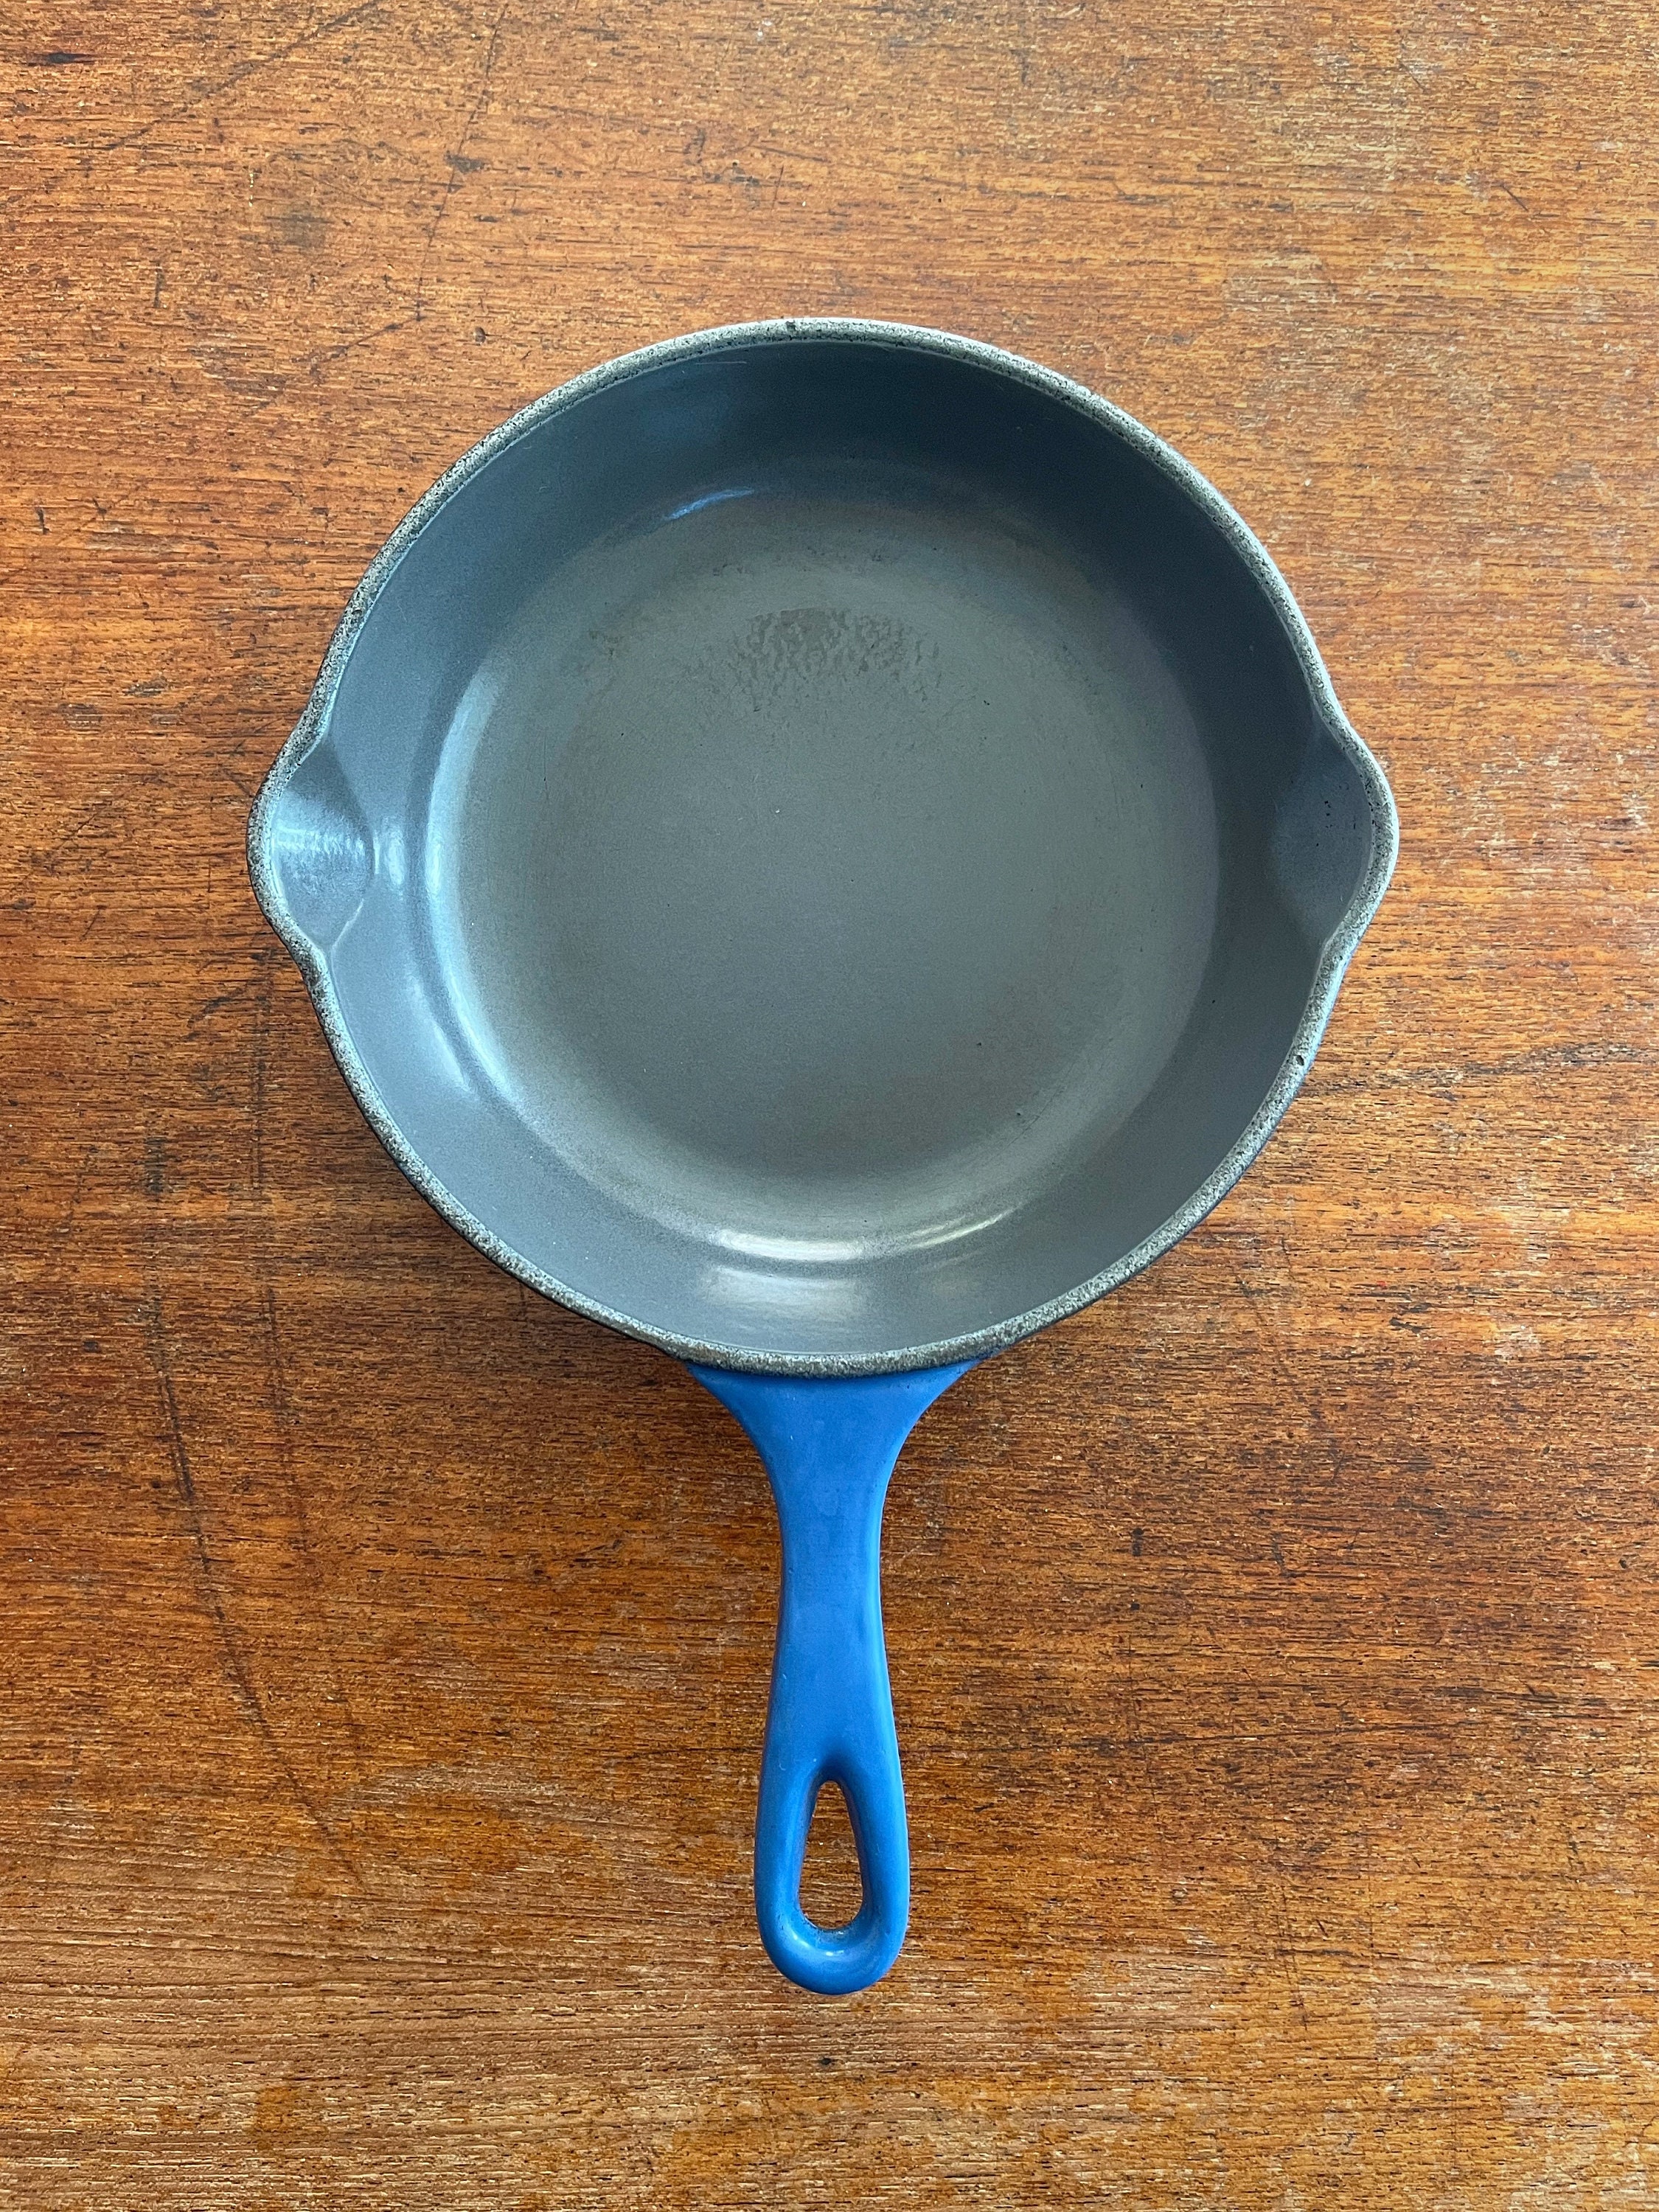 Vintage Le Creuset Cast Iron Skillet Frying Pan #20 Blue Made in France